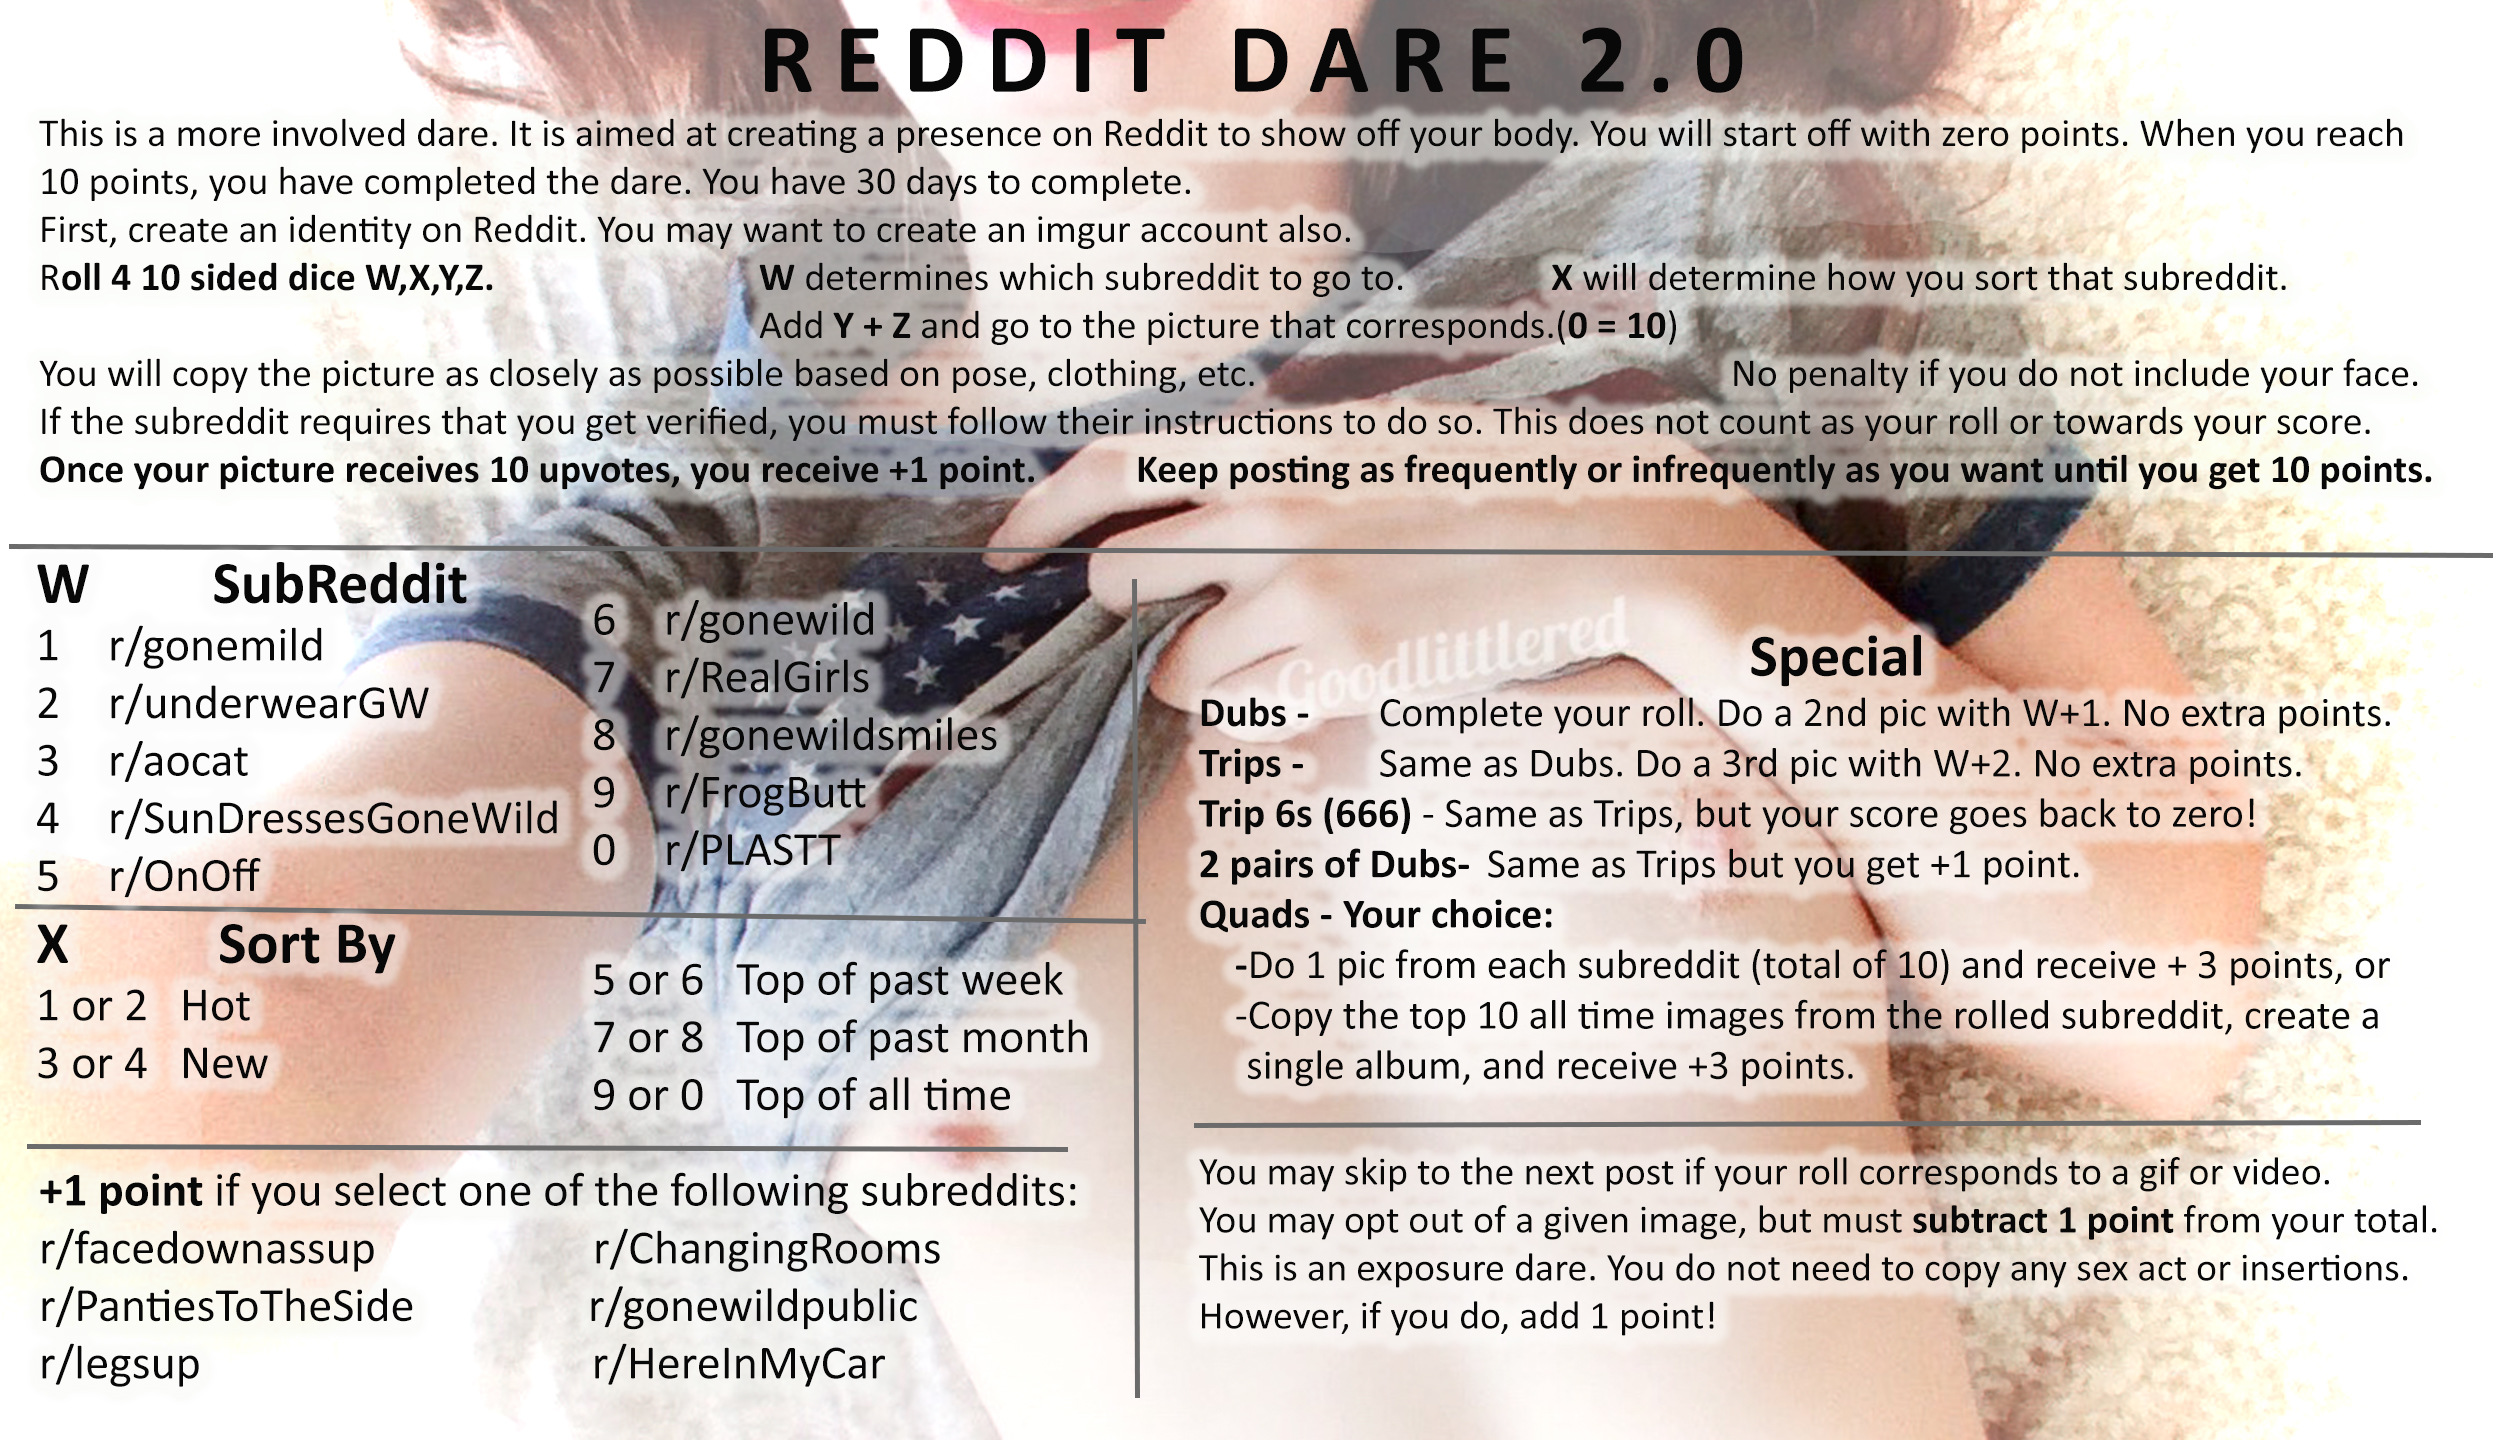 reddit,exposure,dare,public,exposure,couples,webcam,feet,shower,easy,pantie...